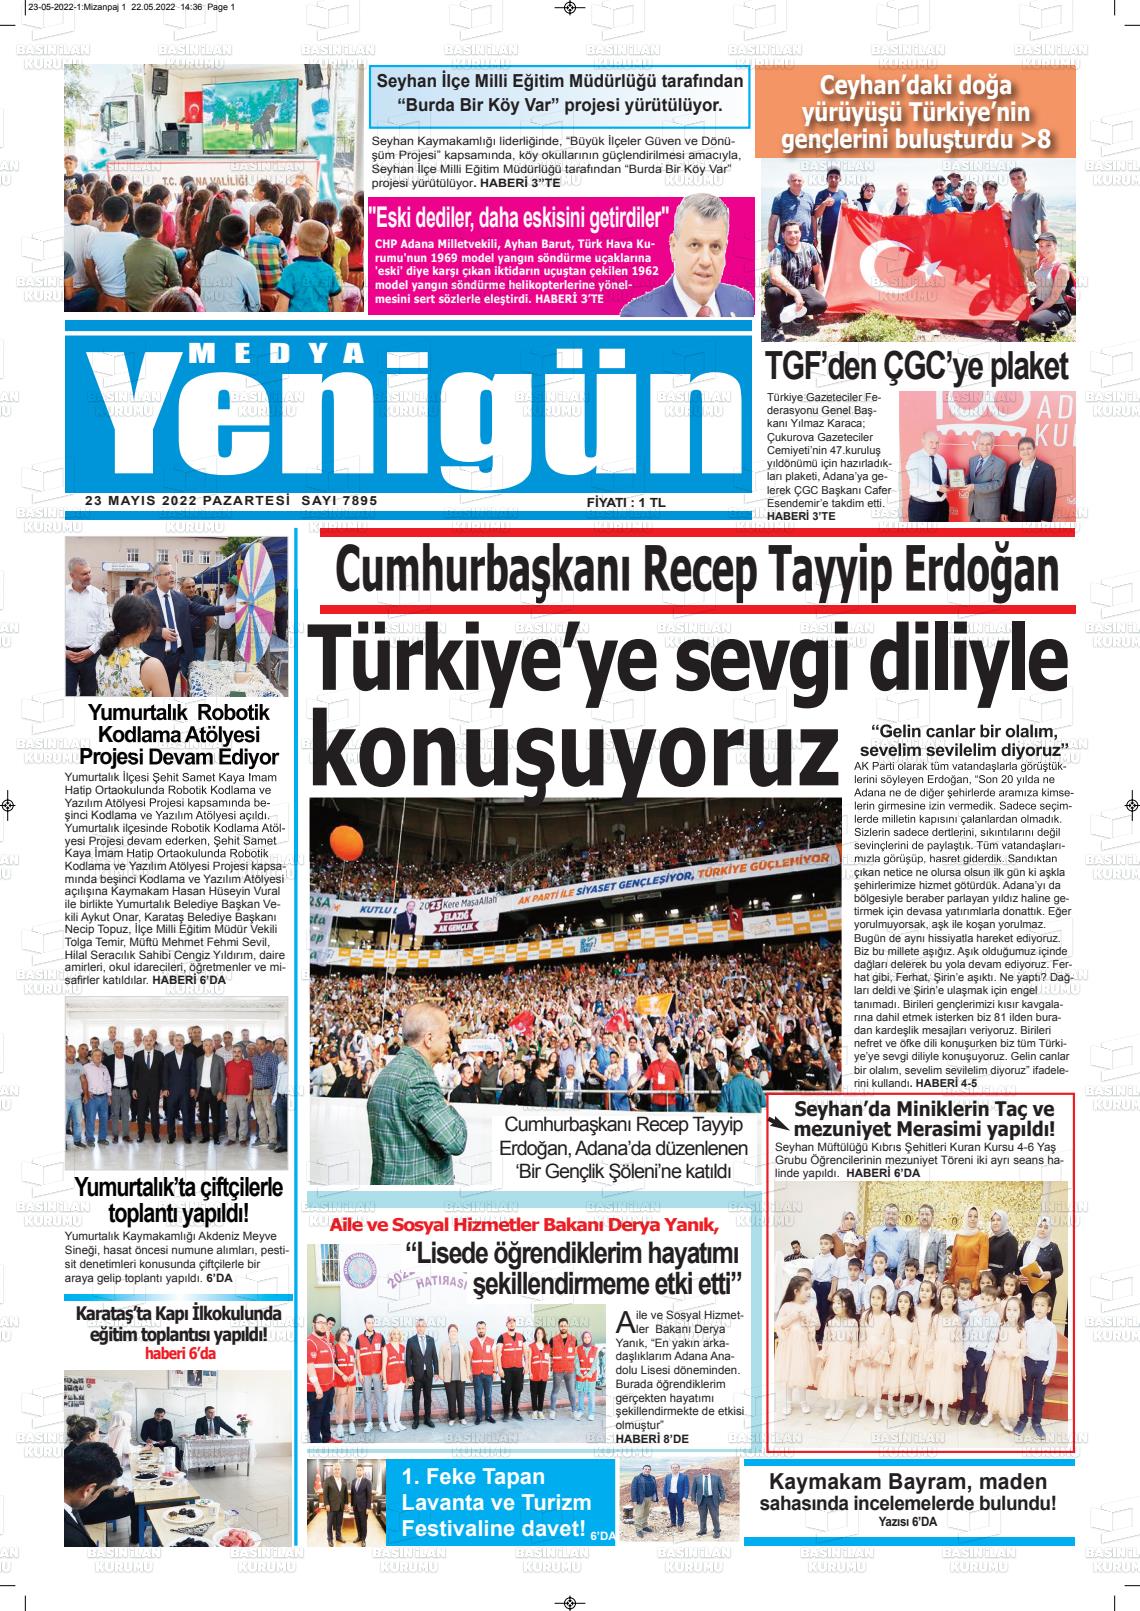 23 Mayıs 2022 Medya Yenigün Gazete Manşeti